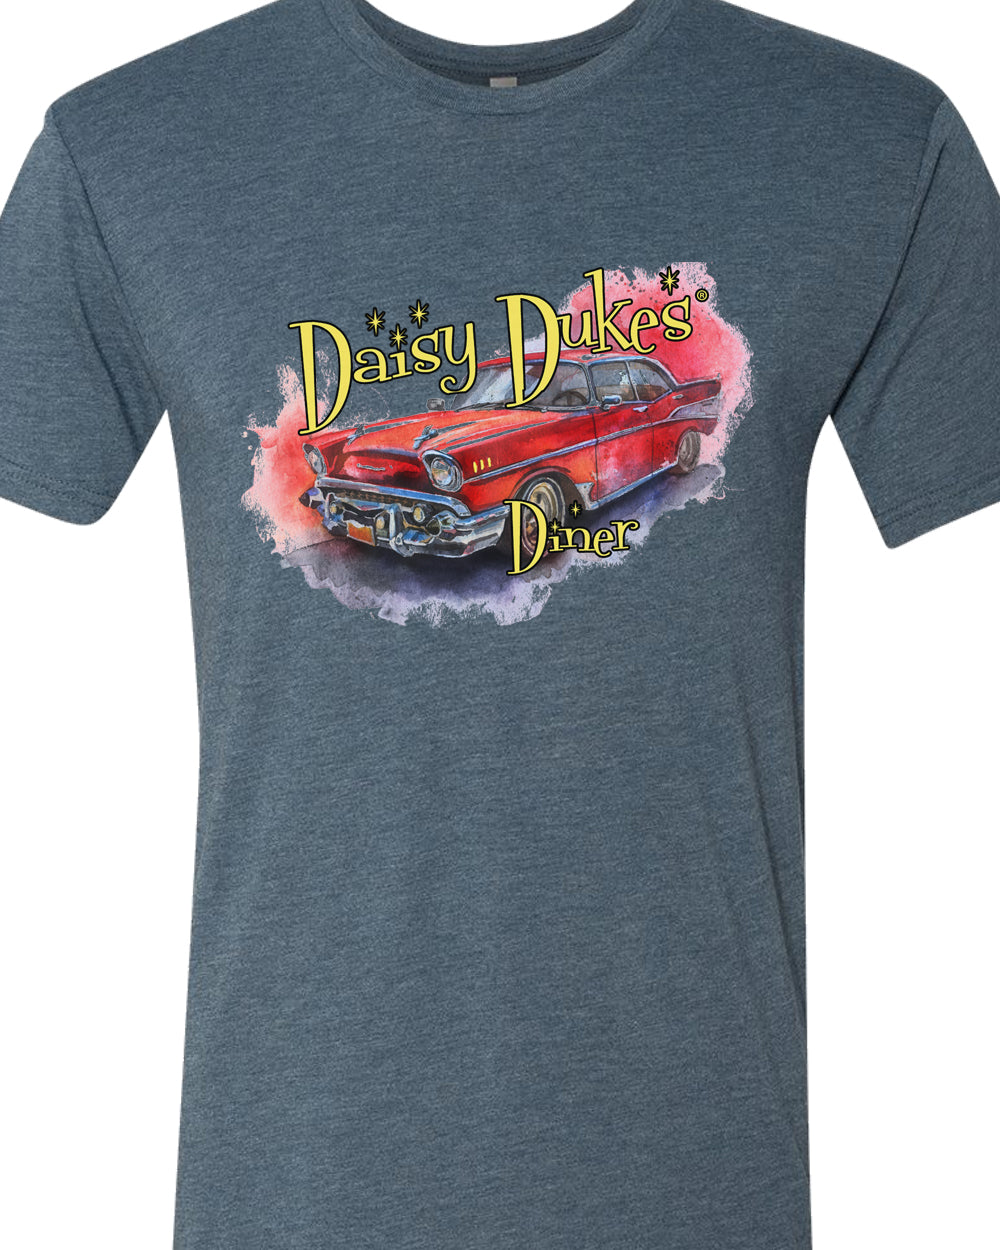 Daisy Dukes® Restaurant 50's Diner Tshirt-Daisy Dukes Restaurant Apparel-Daisy Dukes Restaurant Store